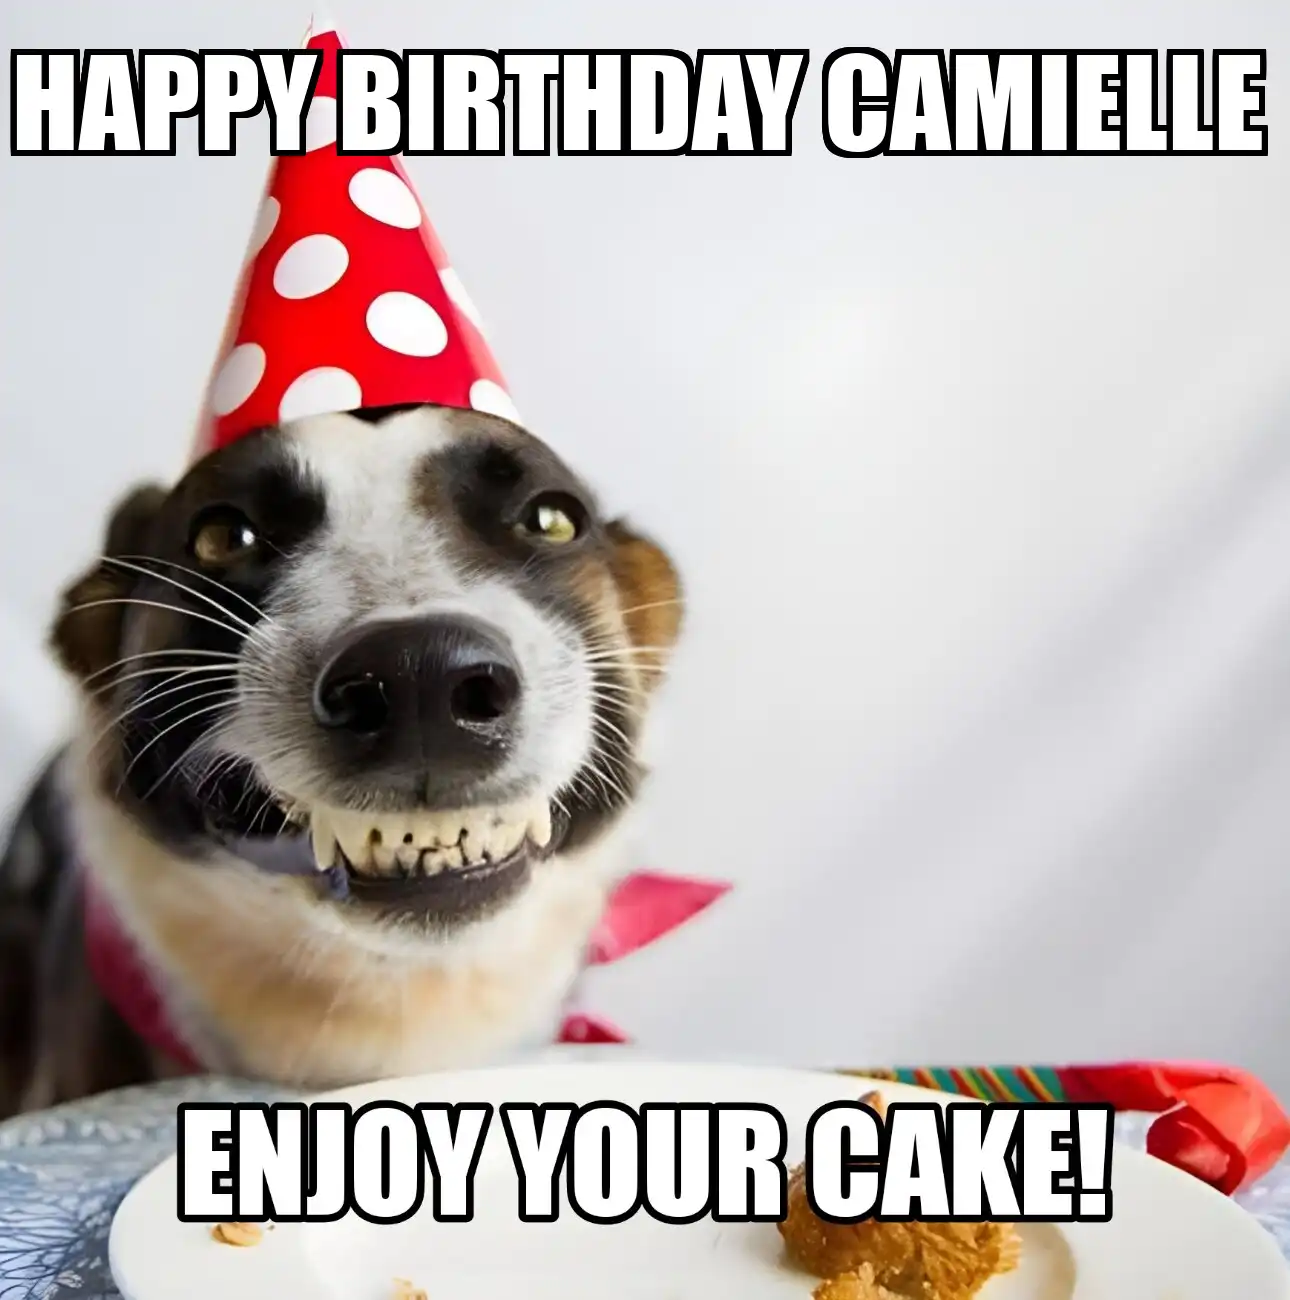 Happy Birthday Camielle Enjoy Your Cake Dog Meme